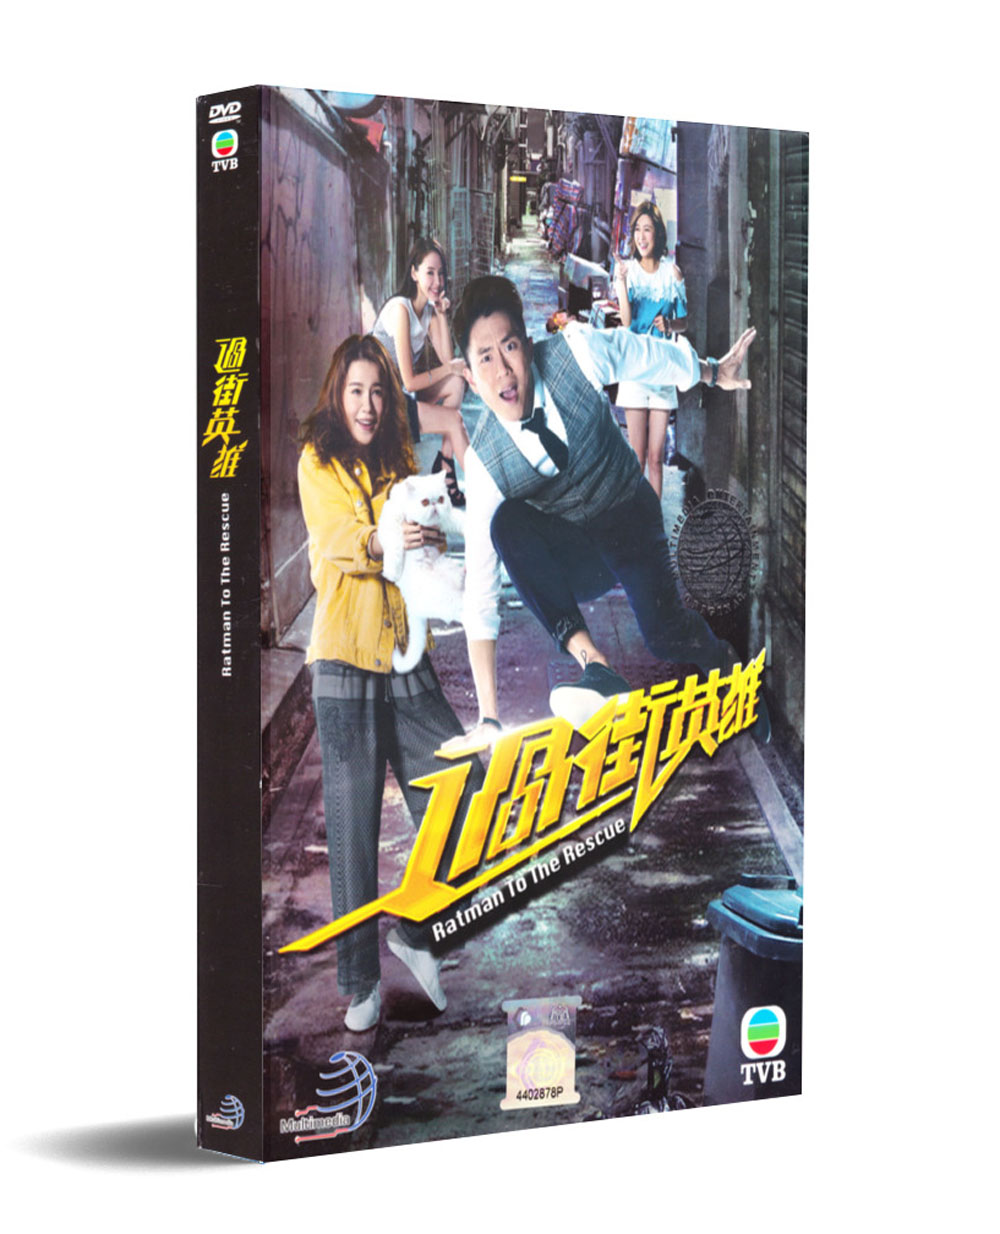 Ratman To The Rescue (DVD) (2019) Hong Kong TV Series